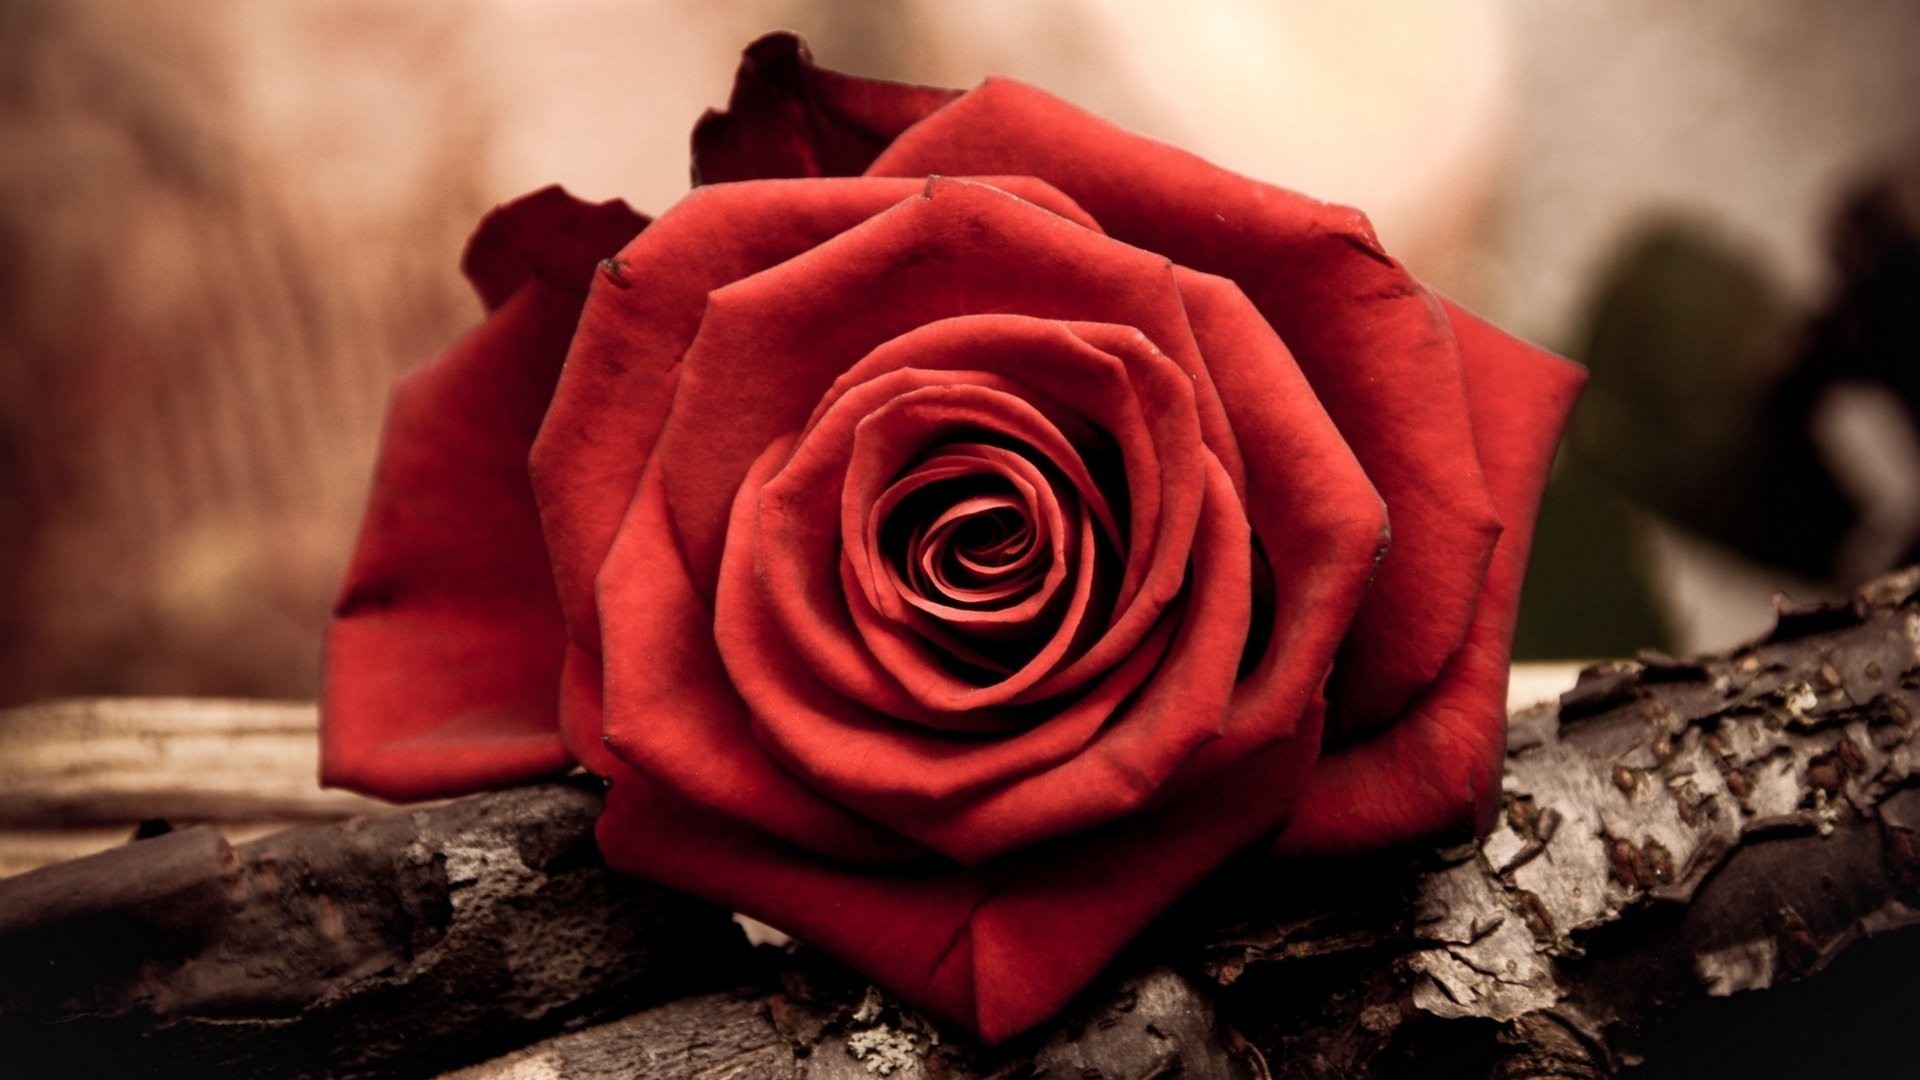 Red Rose Full HD Wallpaper